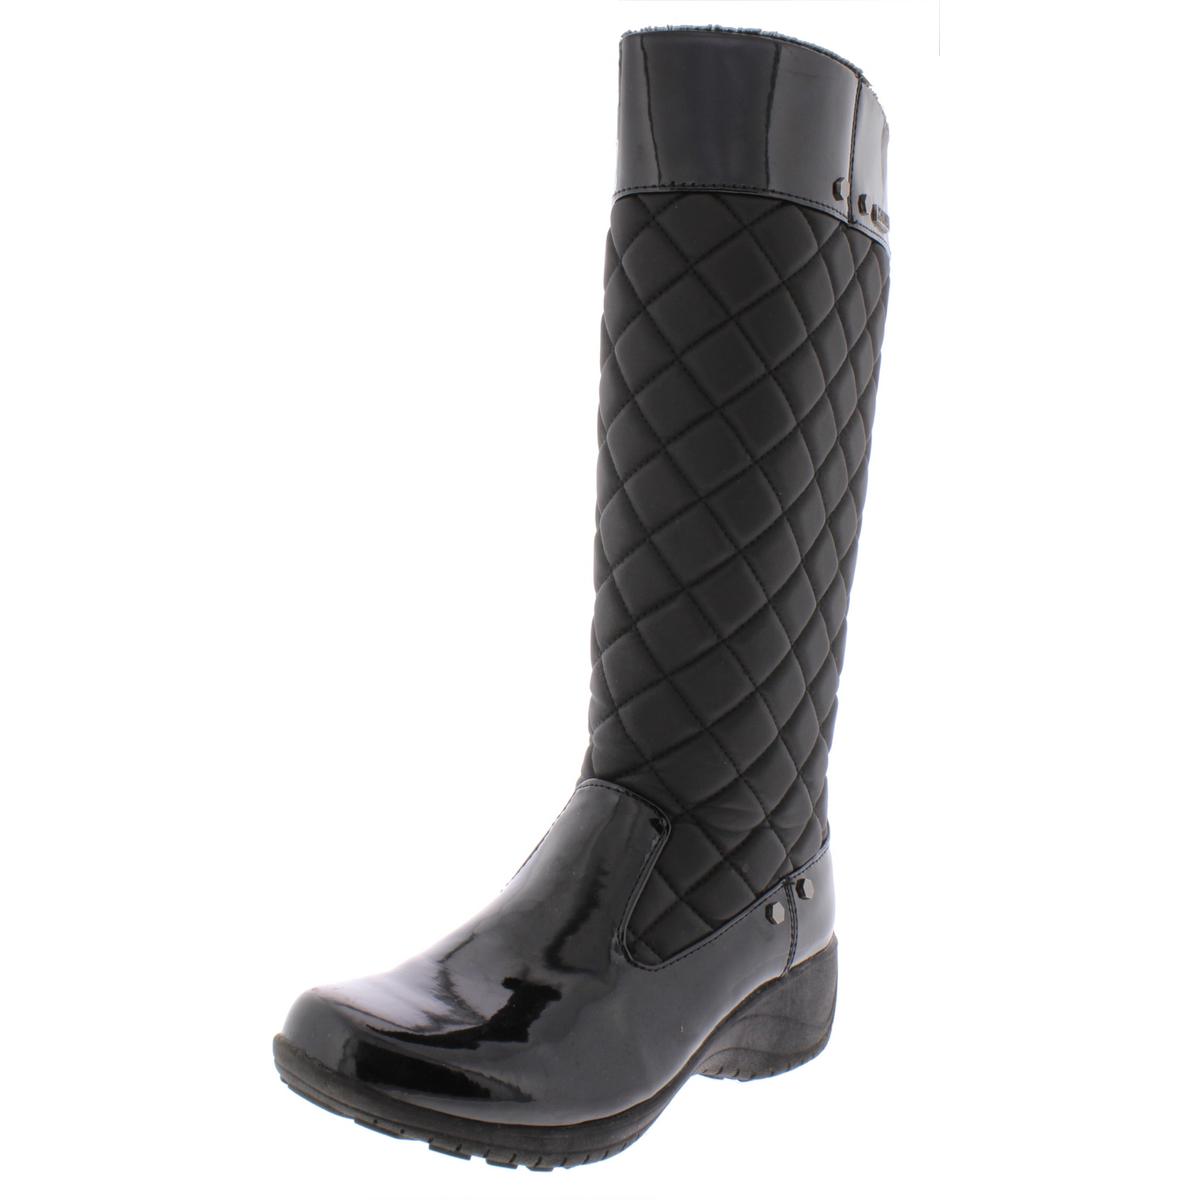 Khombu Womens Merrit 2 Black Quilted Winter Boots Shoes 7 Medium (B,M) BHFO 1449 | eBay